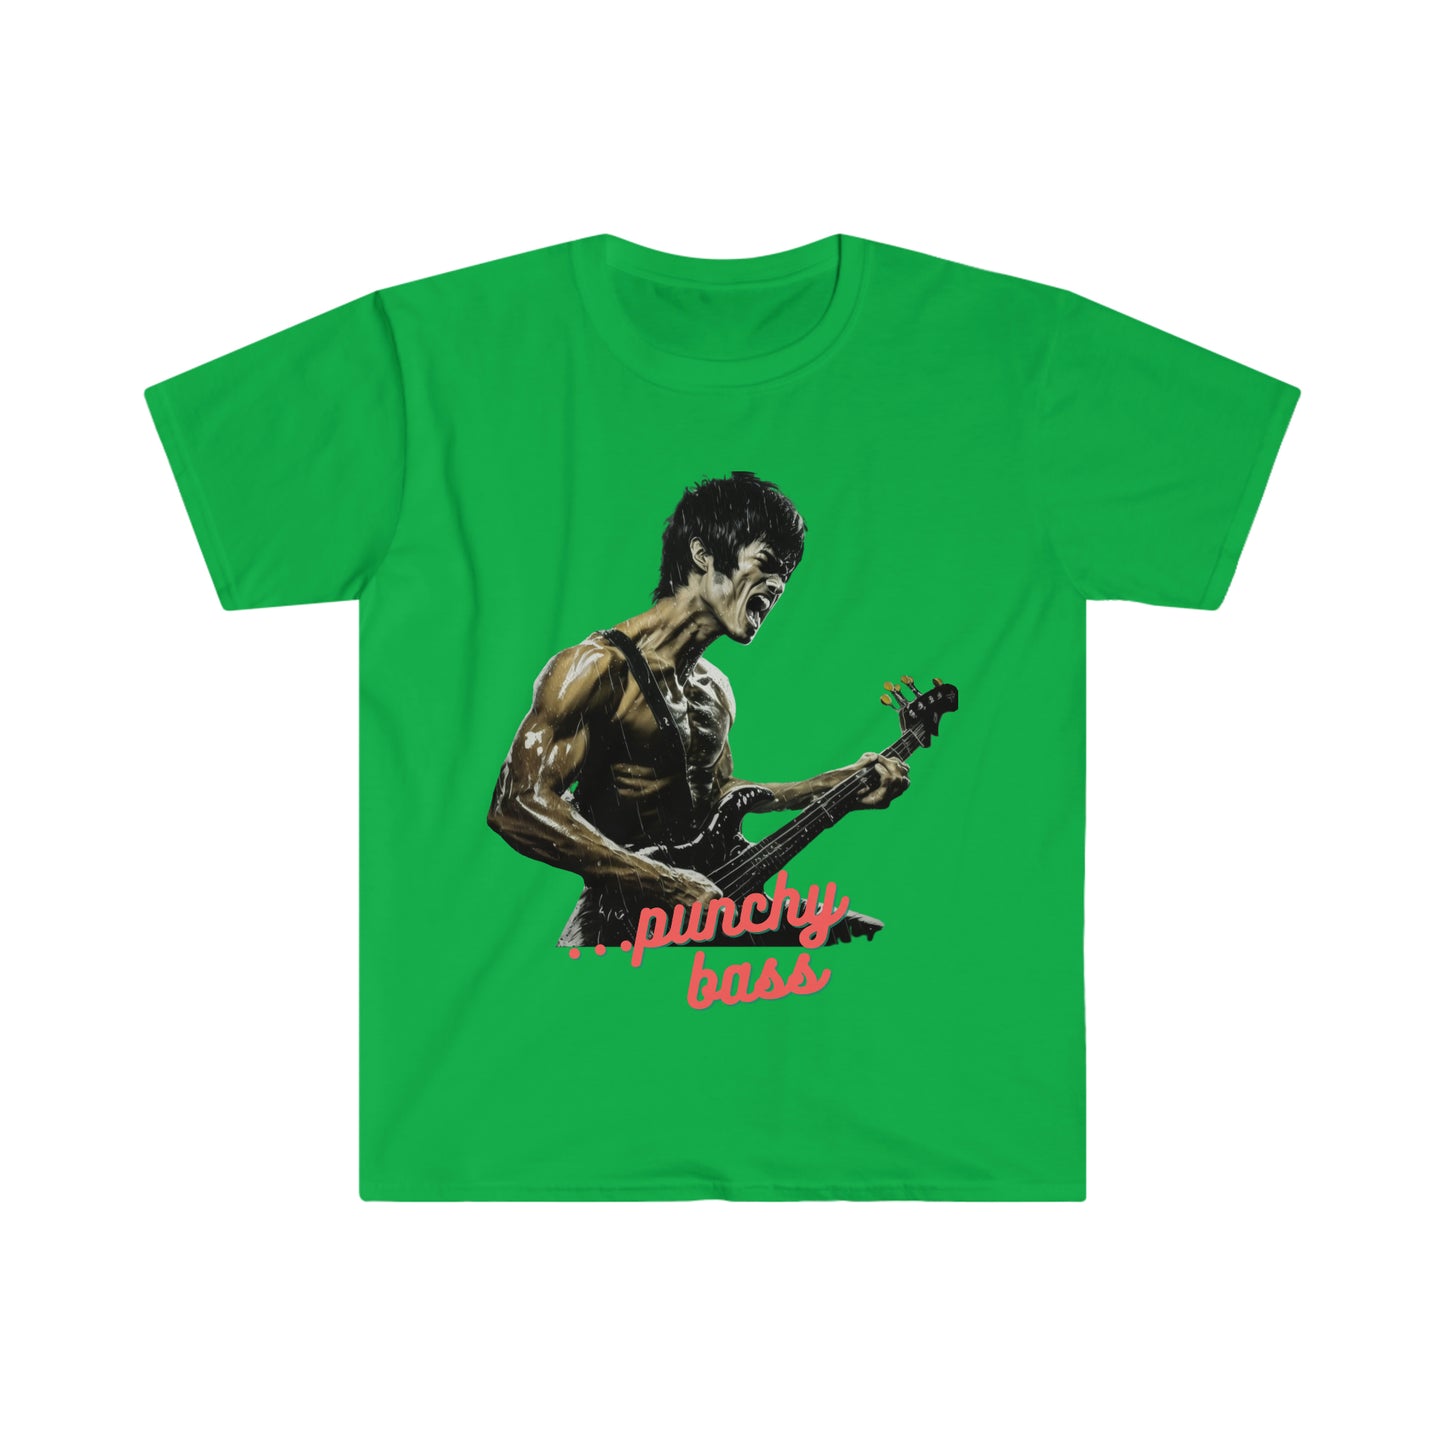 Punchy Bass - Unisex Softstyle T-Shirt